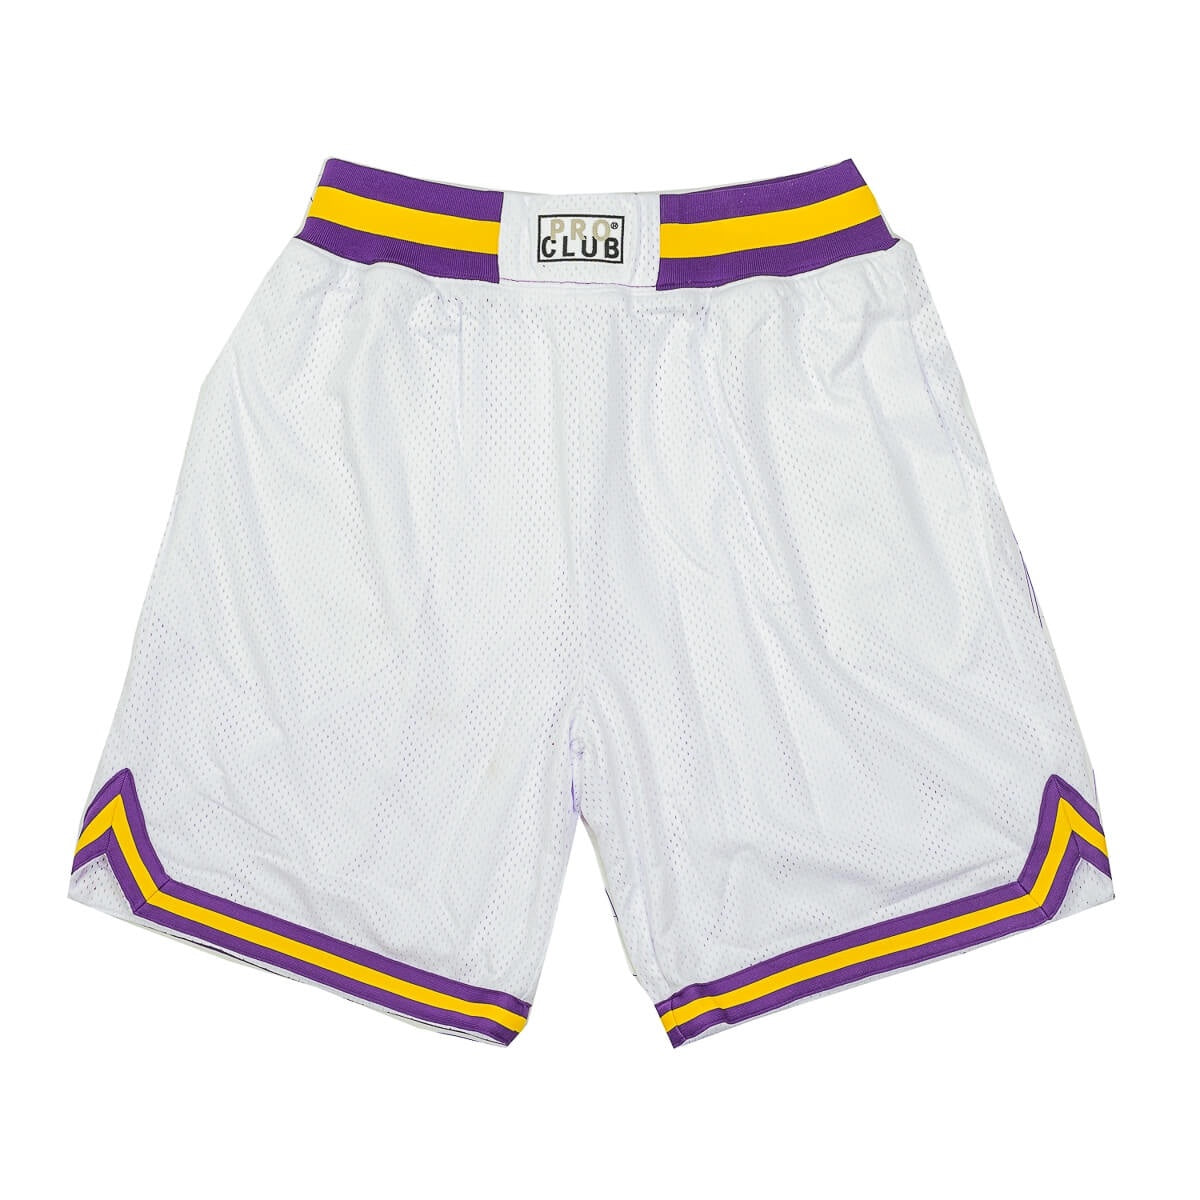 Pro Club Classic Basketball Shorts - White/Purple